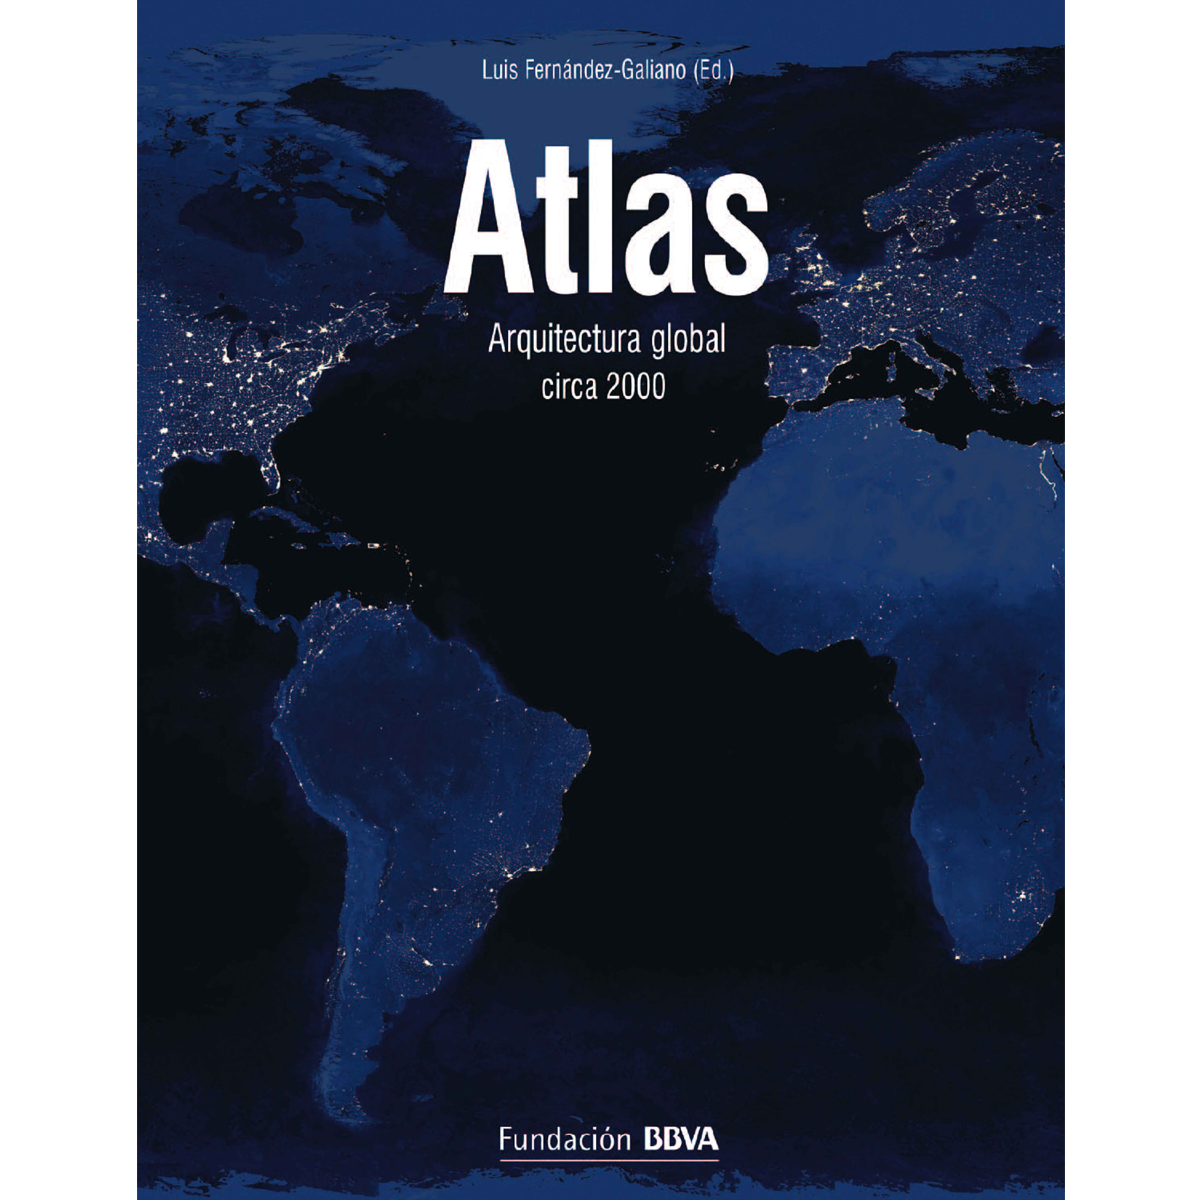 Atlas. Arquitectura global circa 2000